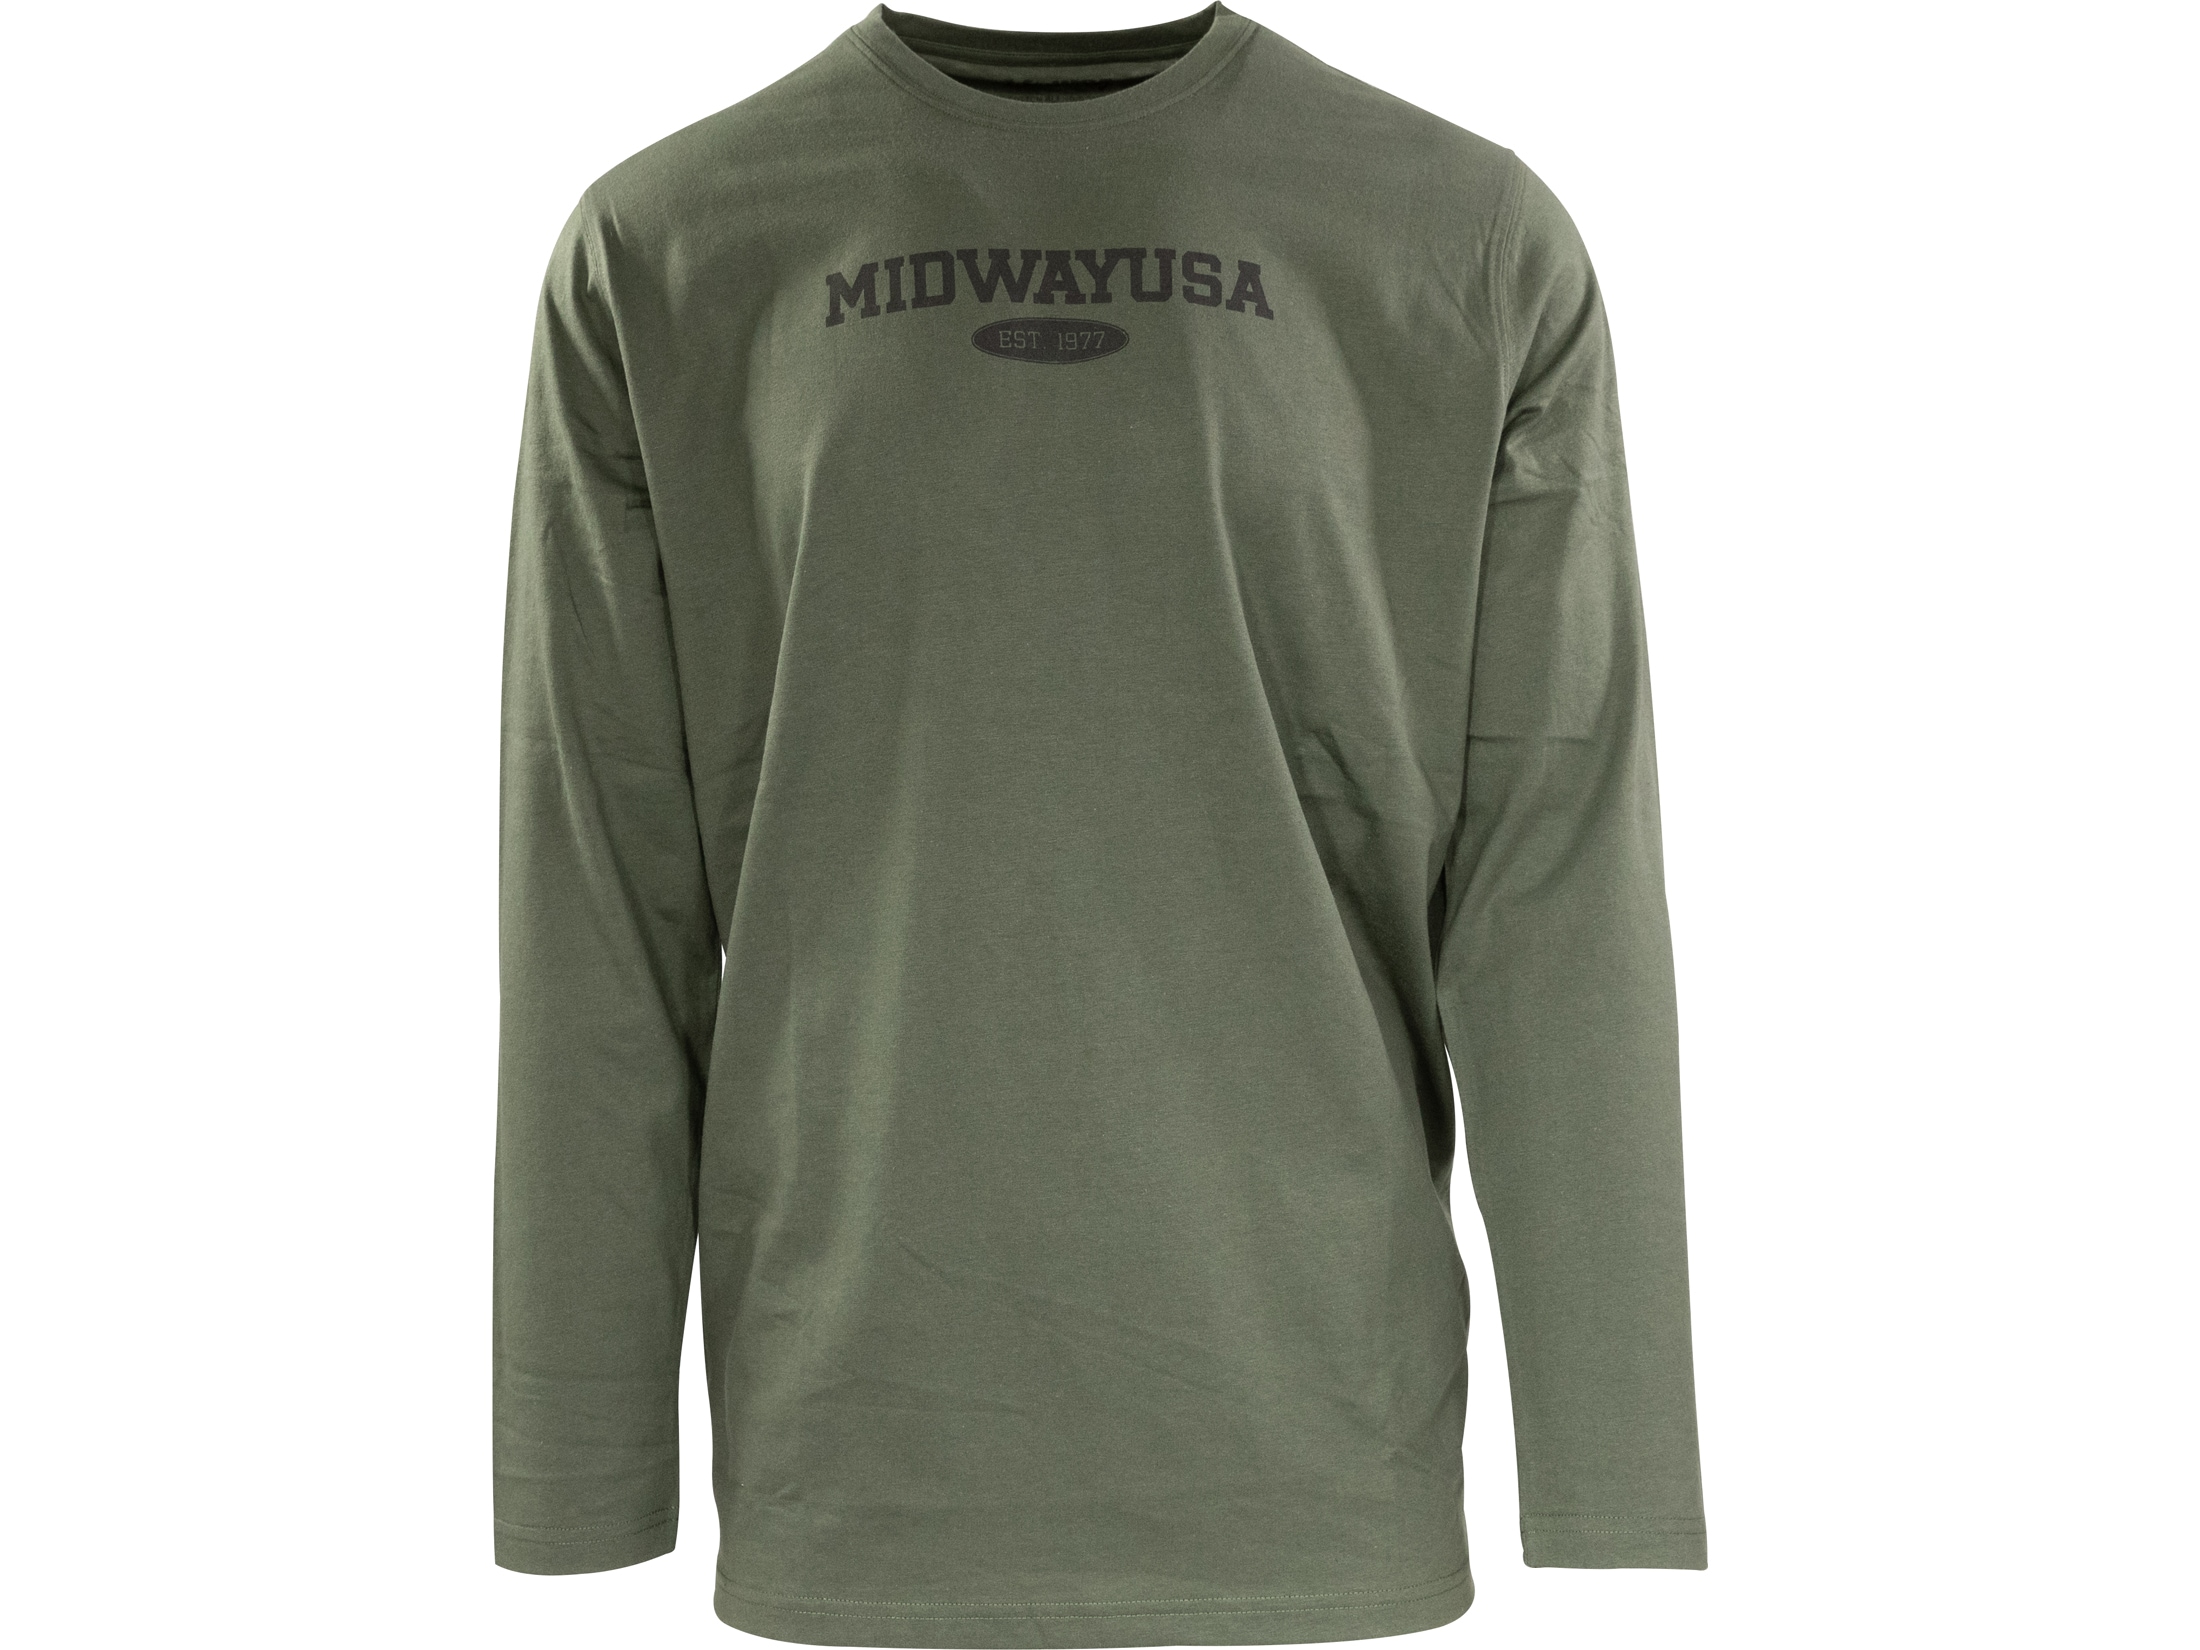 MidwayUSA Men's Long Sleeve T-Shirt Cotton Blend Olive Drab University